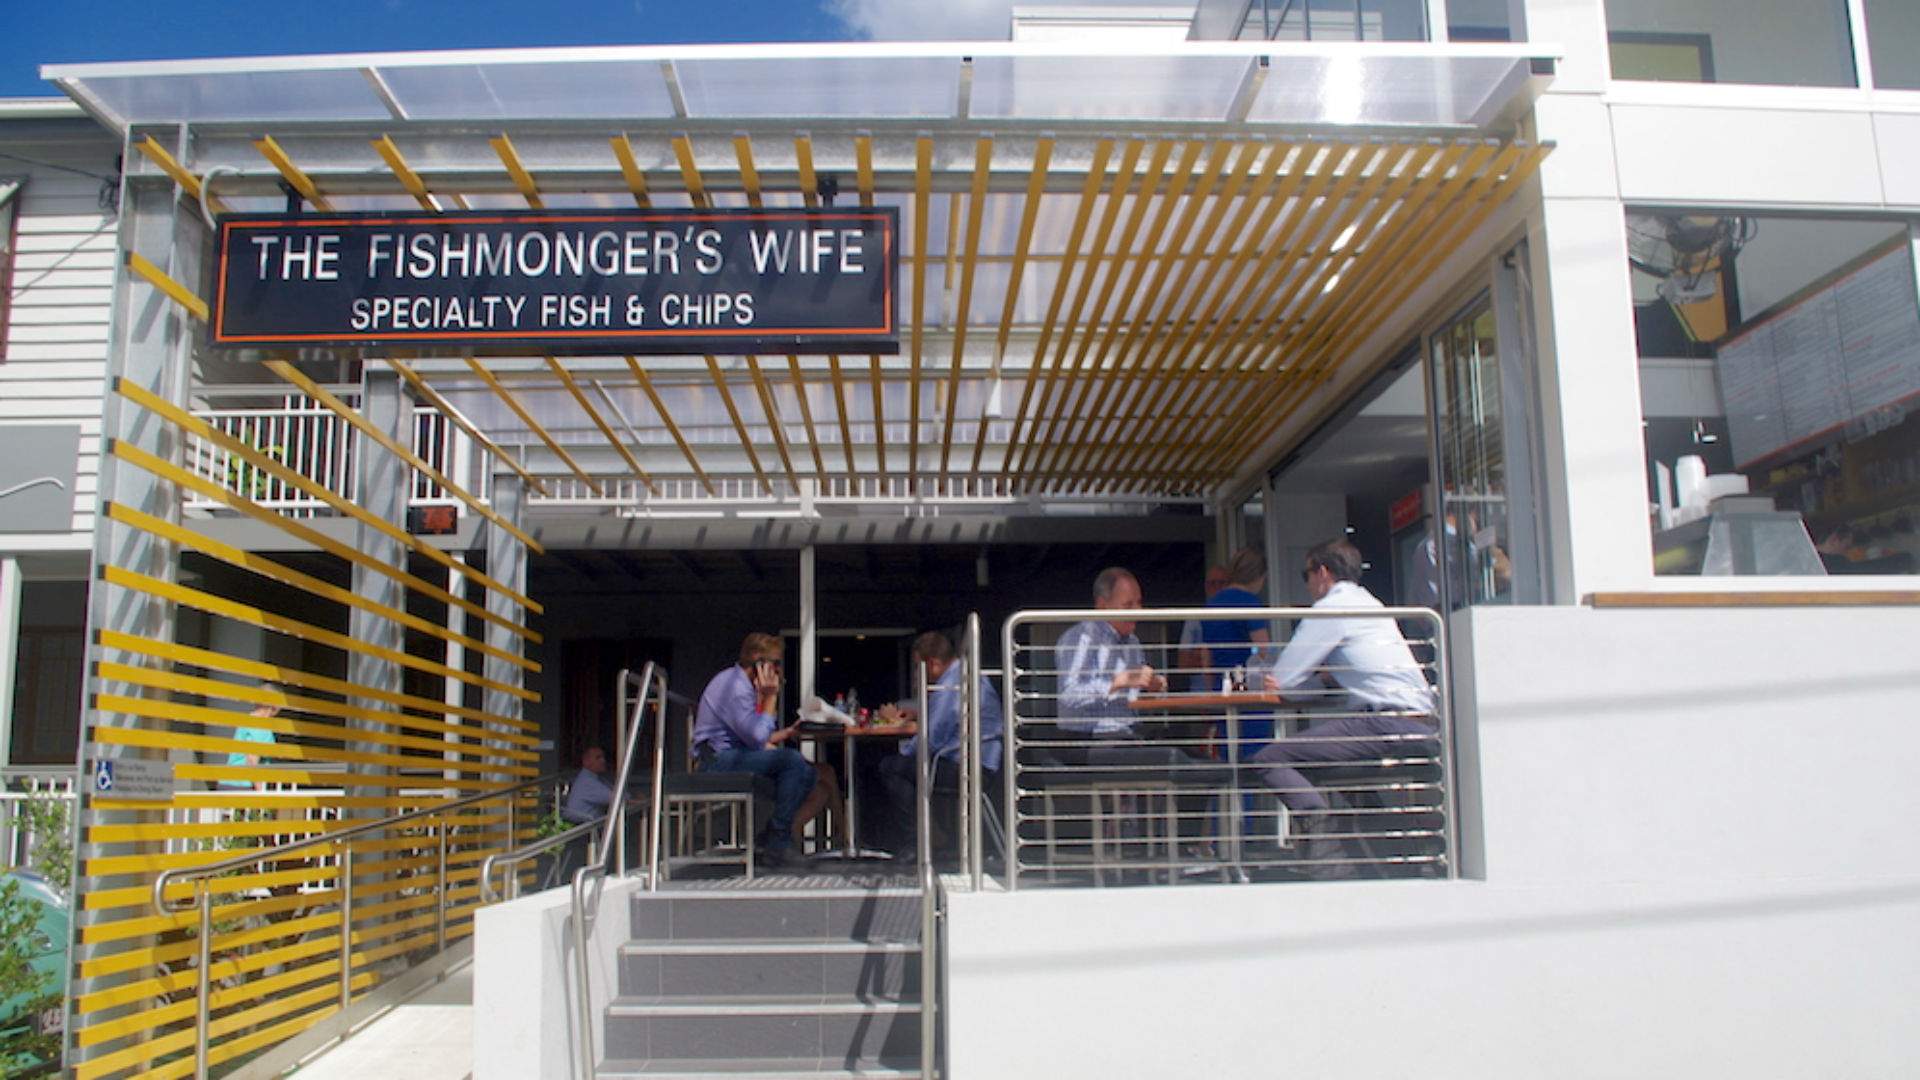 The Fishmonger's Wife